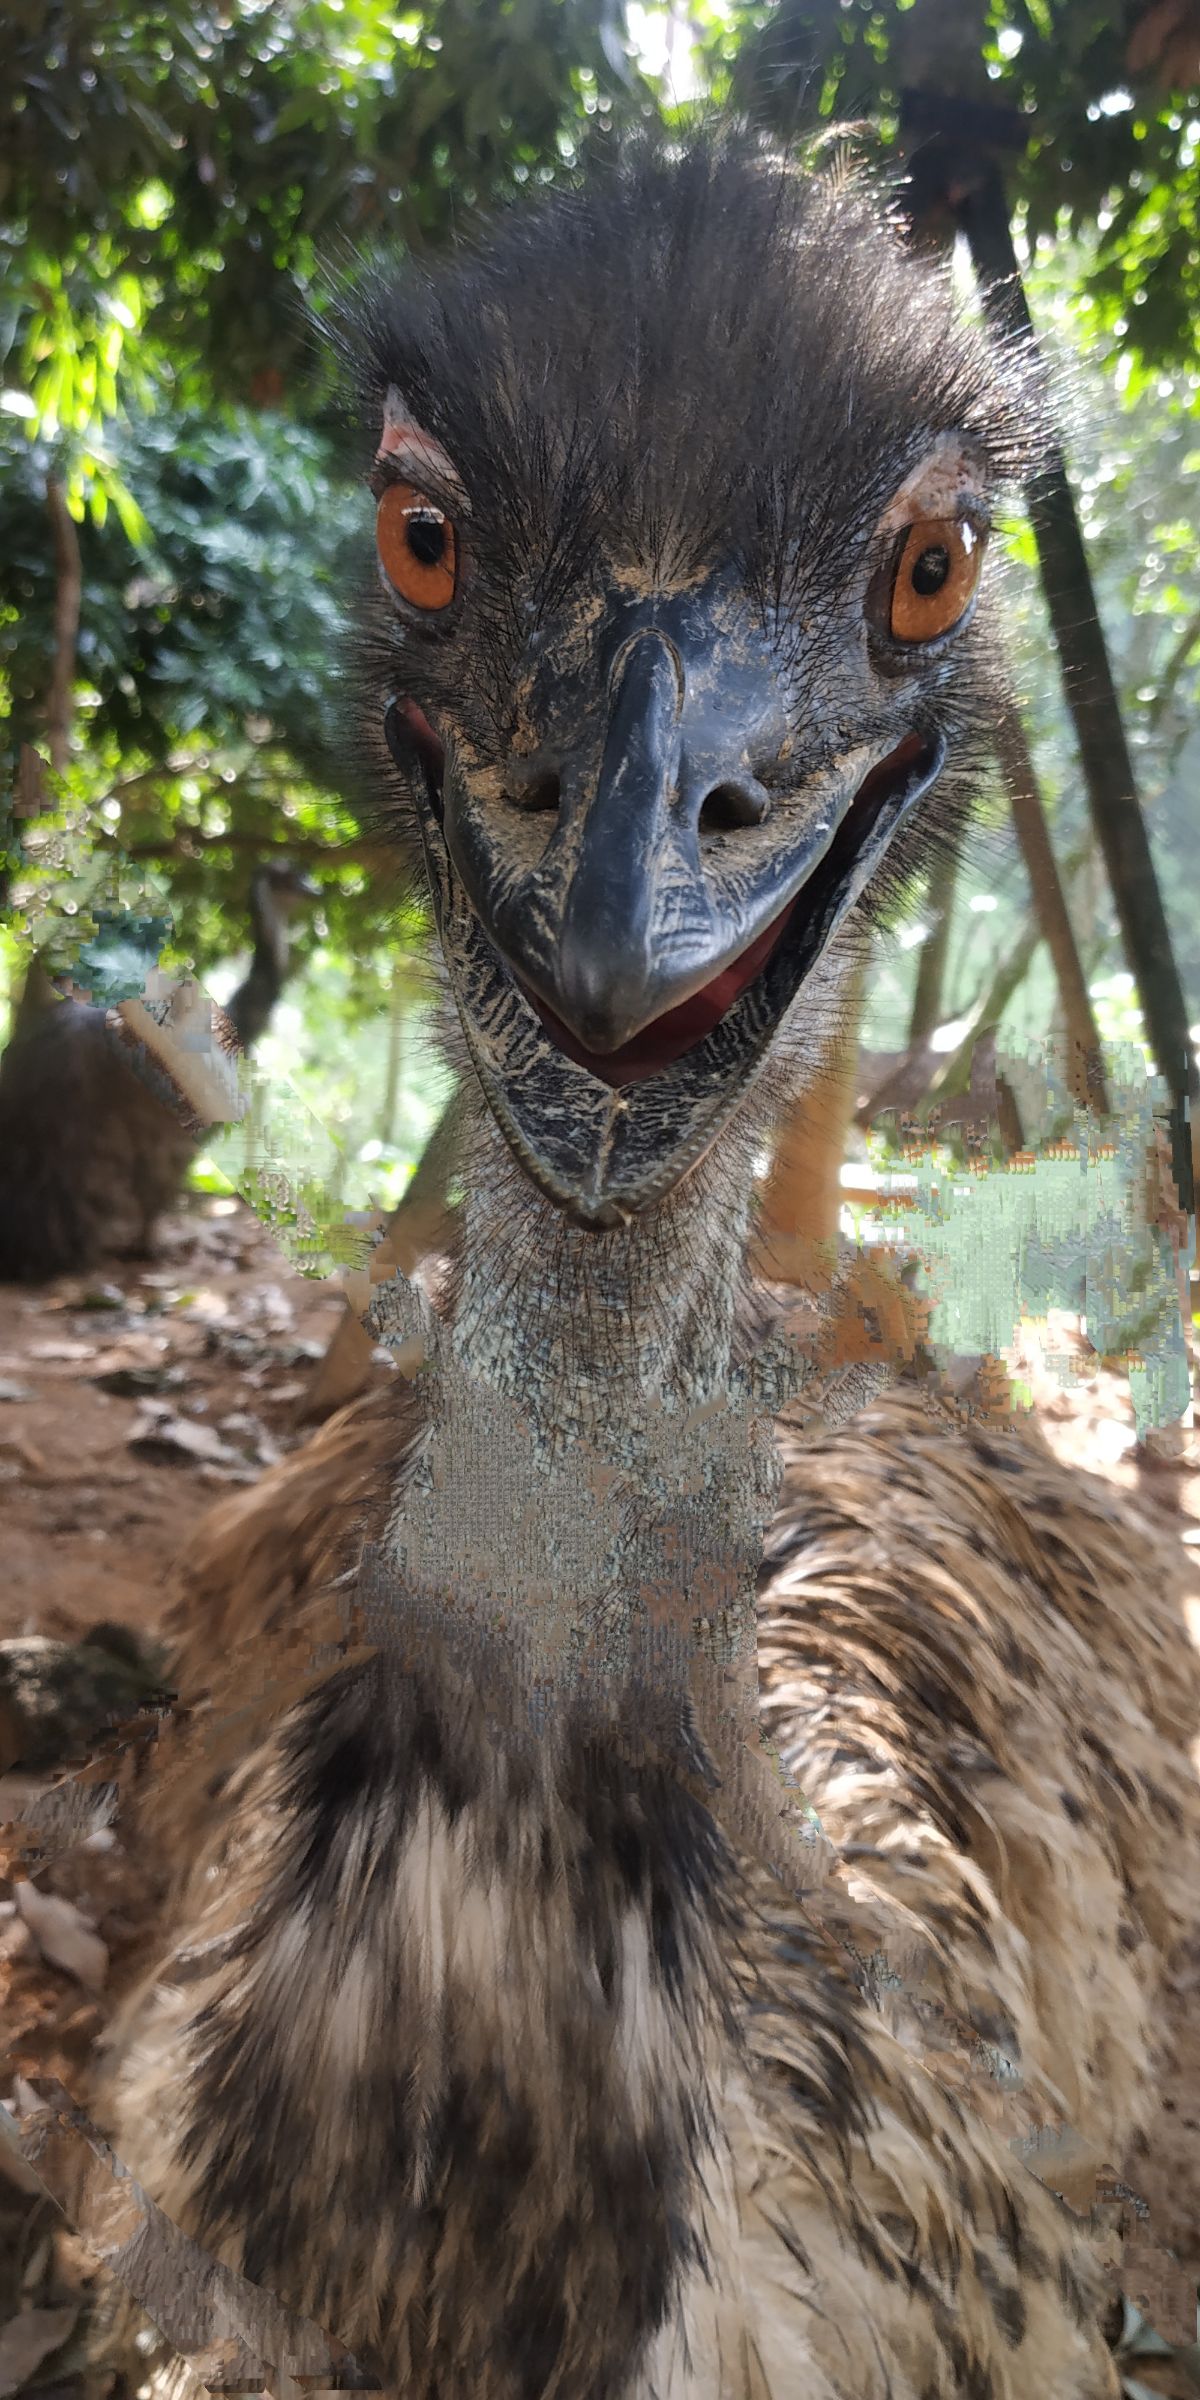 A close-up of a Tasmaniam Emu head.